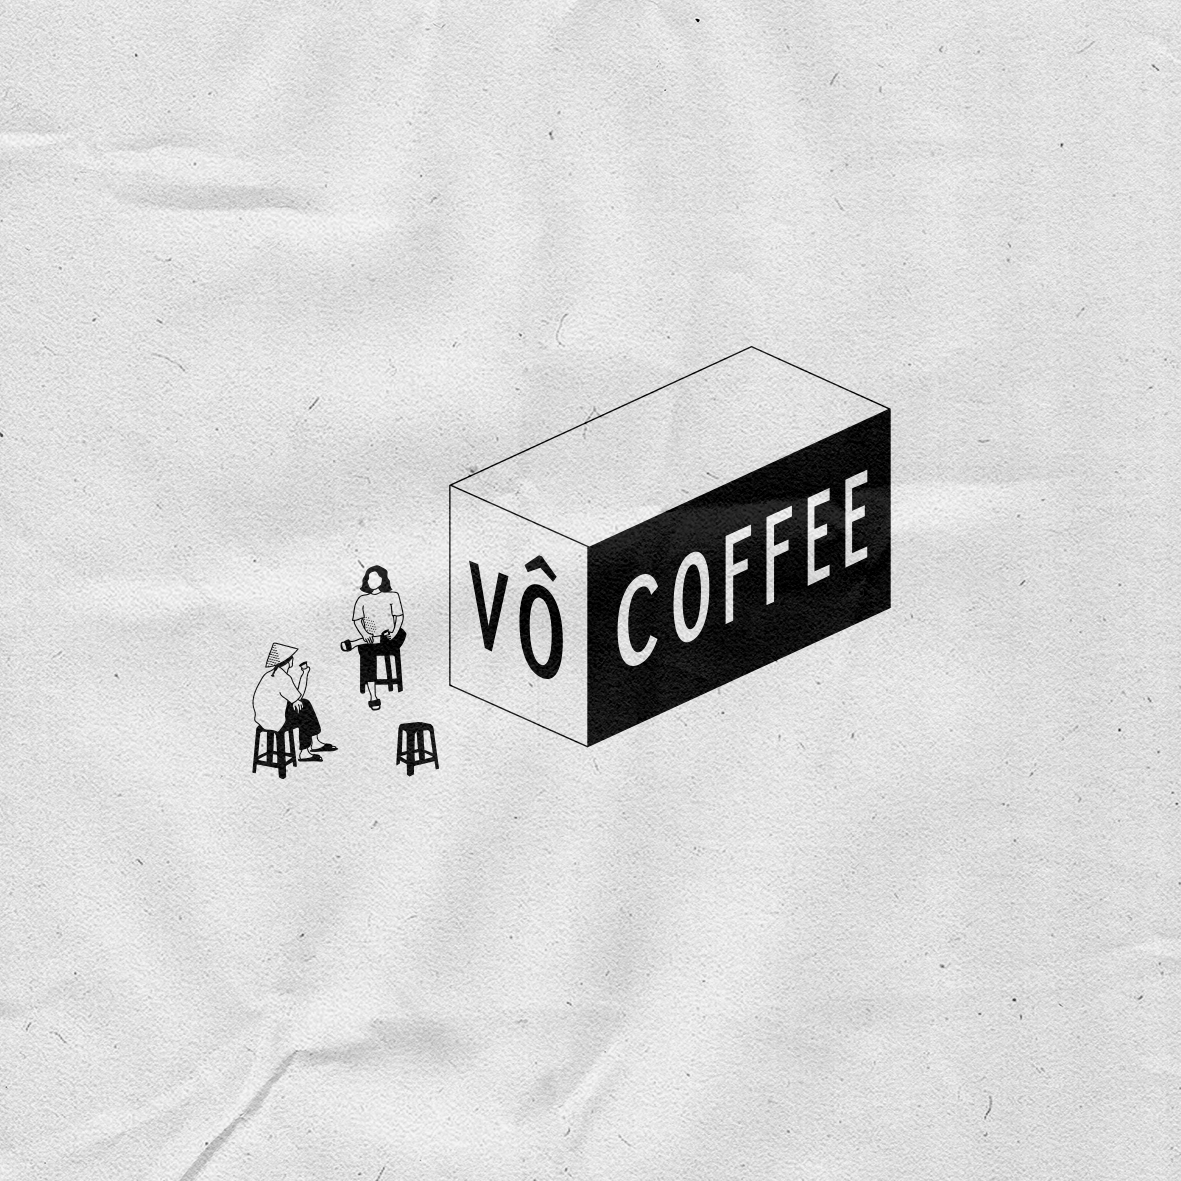 Vo Coffee Company Vietnamese Cafe Branding Project